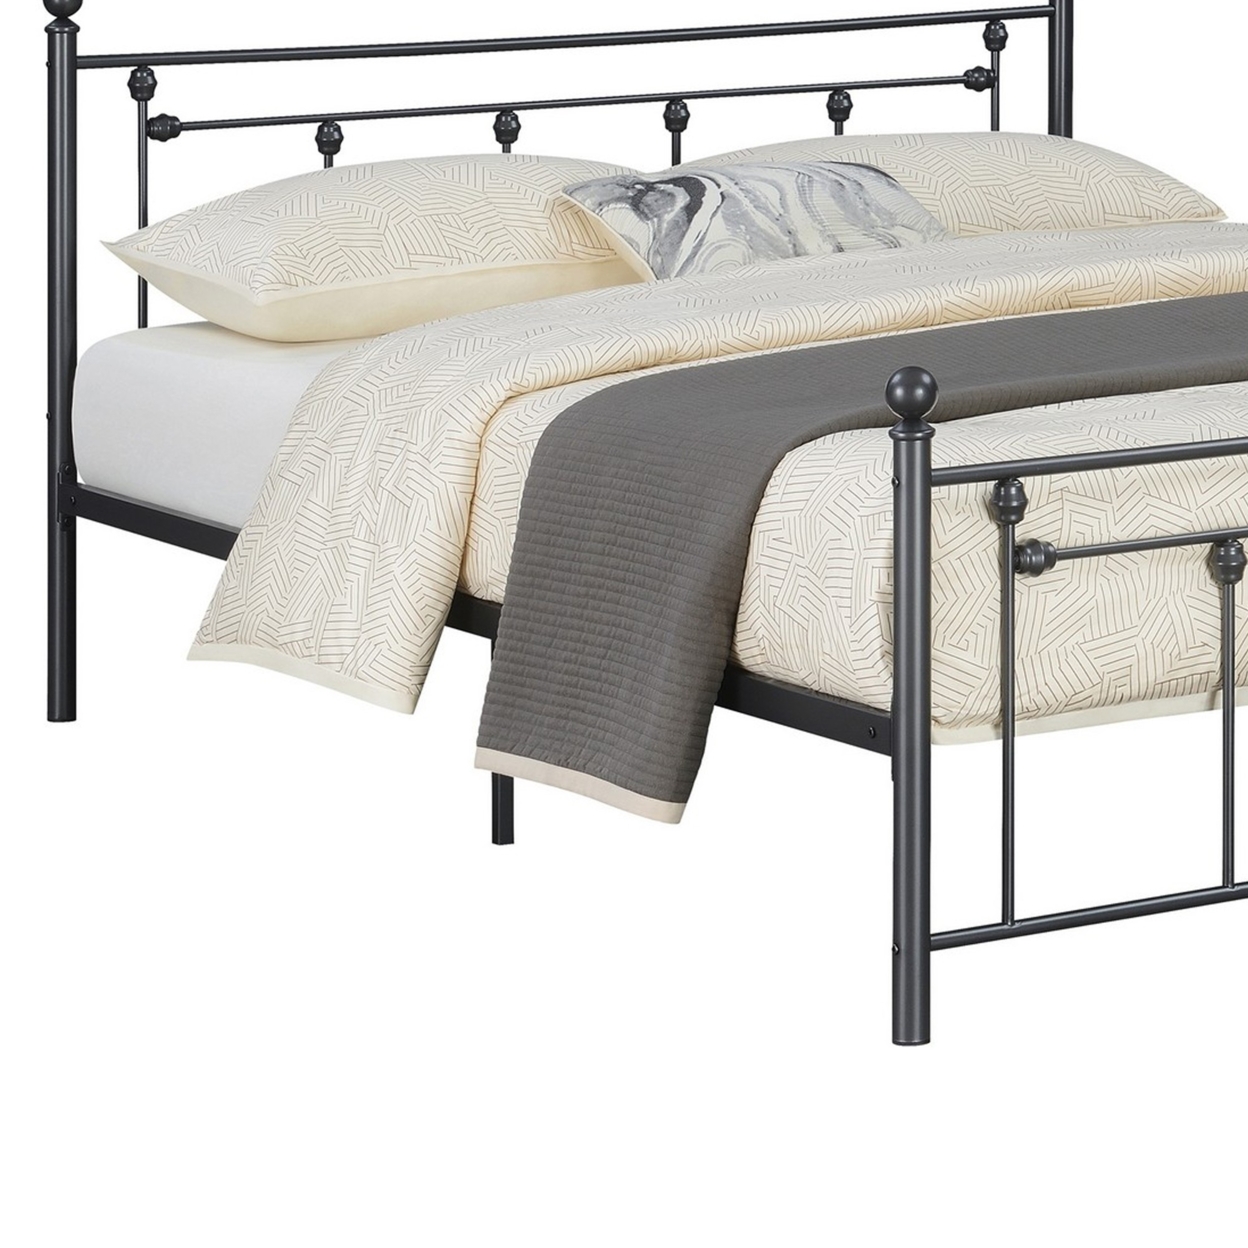 Olly Modern Queen Size Bed, Heavy Steel Metal Frame, Slatted, Matte Black